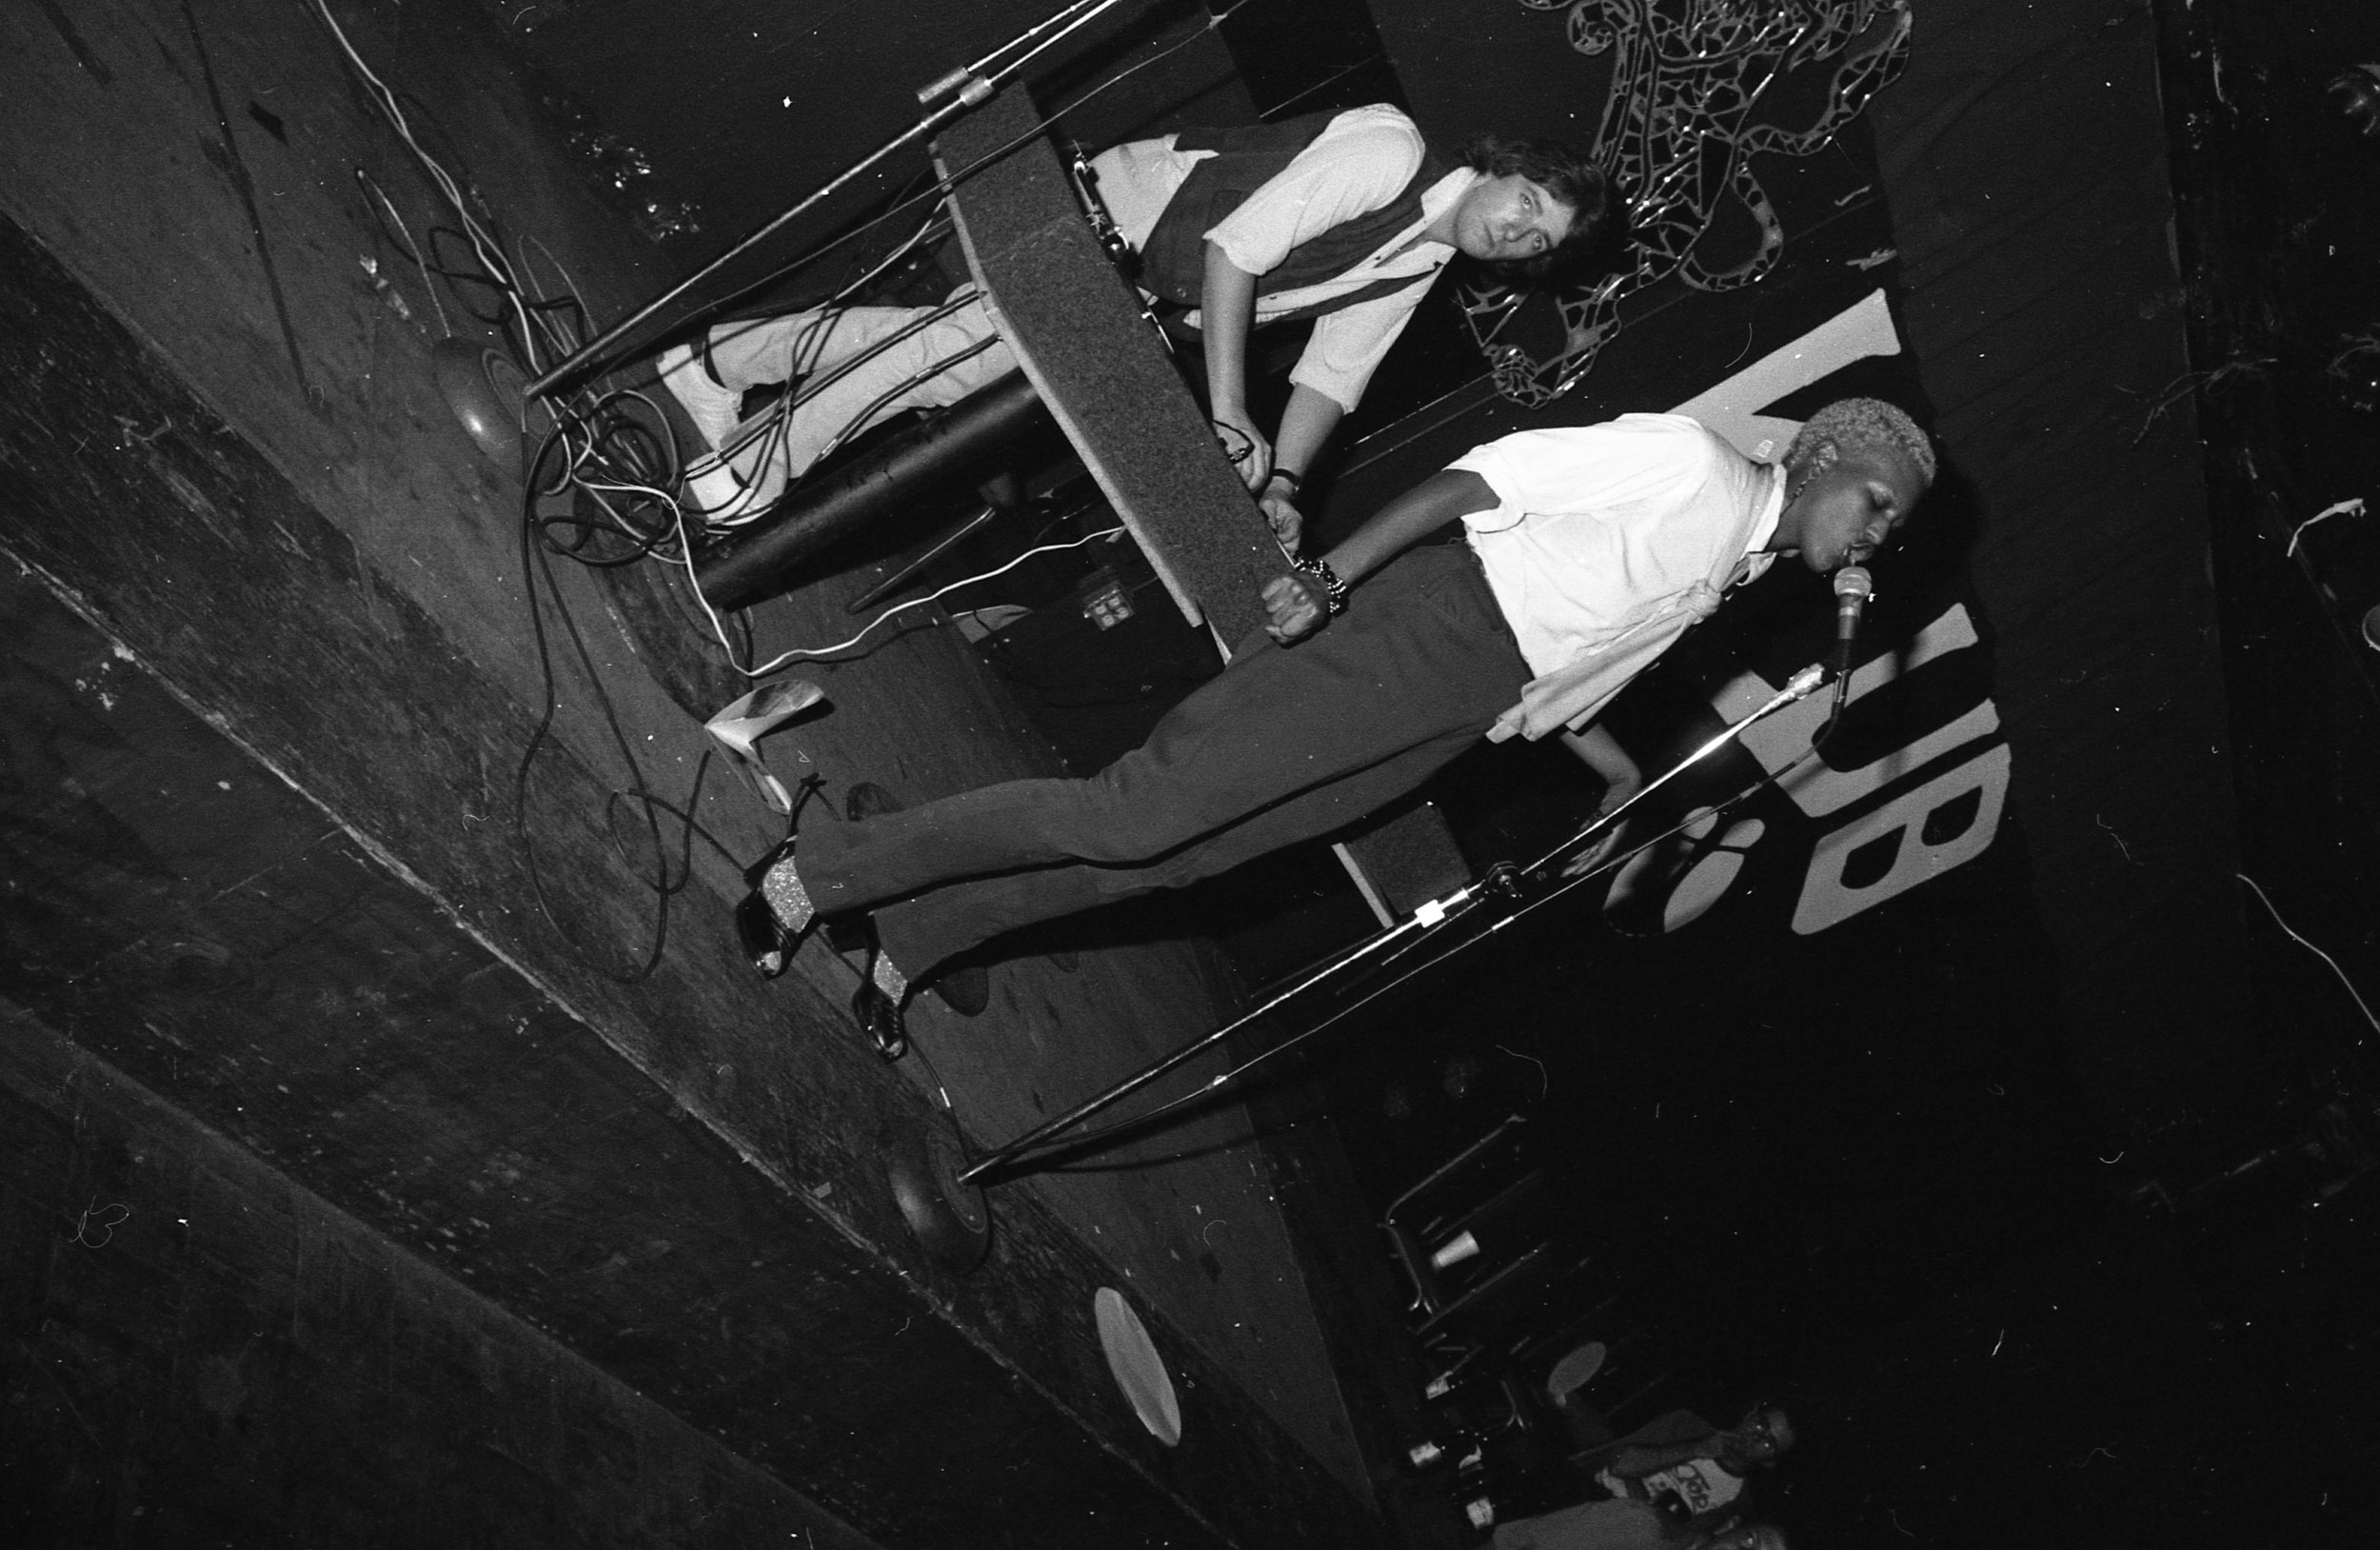 Taquila Mockingbird performs, rap contest, On Klub, Los Angeles, 1981